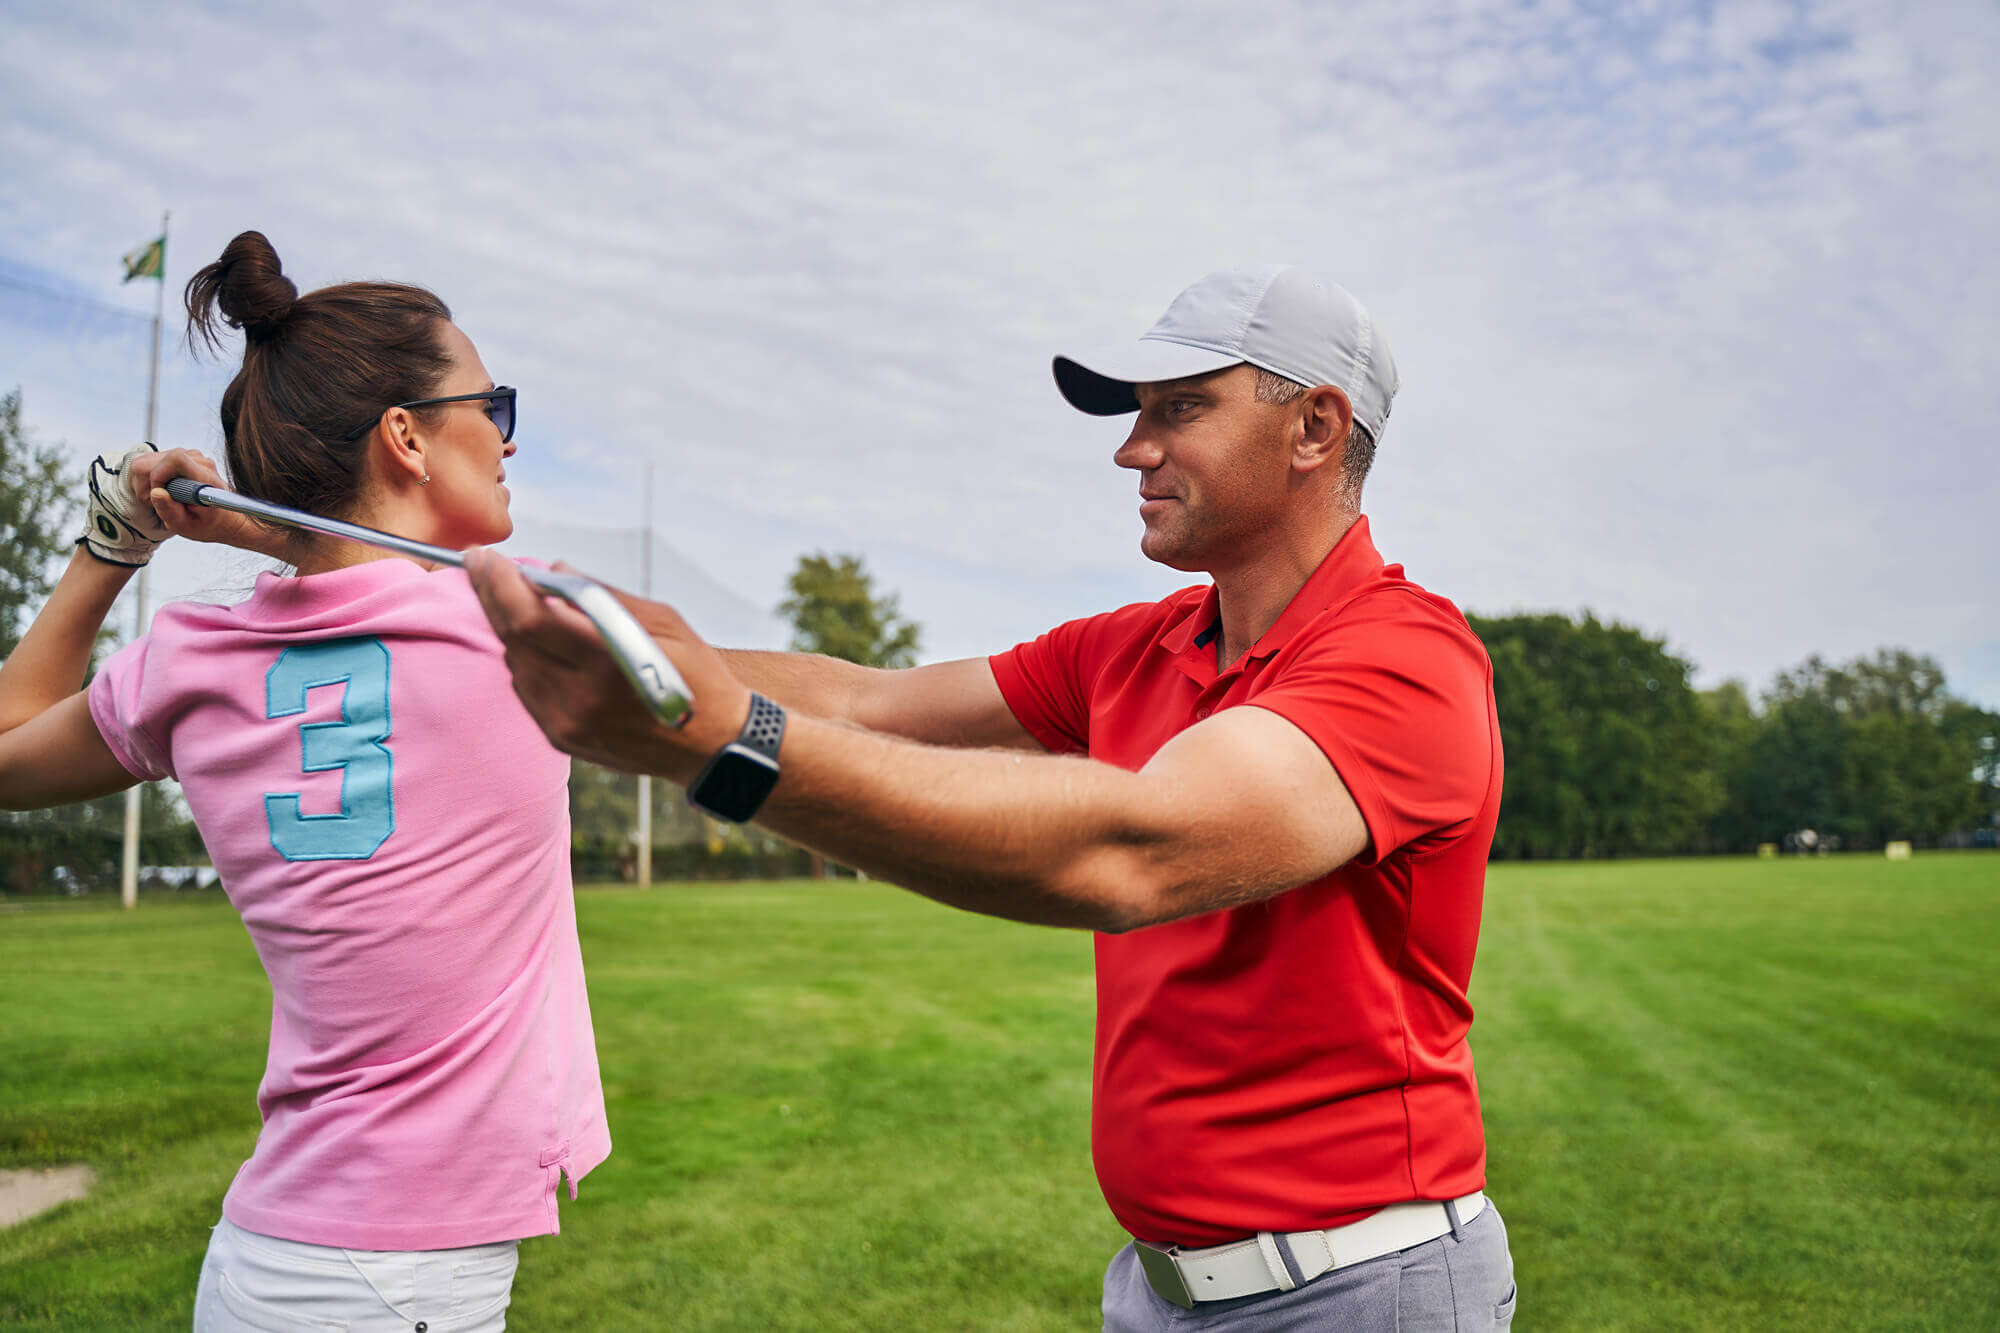 female-golfer-learning-to-make-a-backswing-2023-11-27-05-36-25-utc.jpg